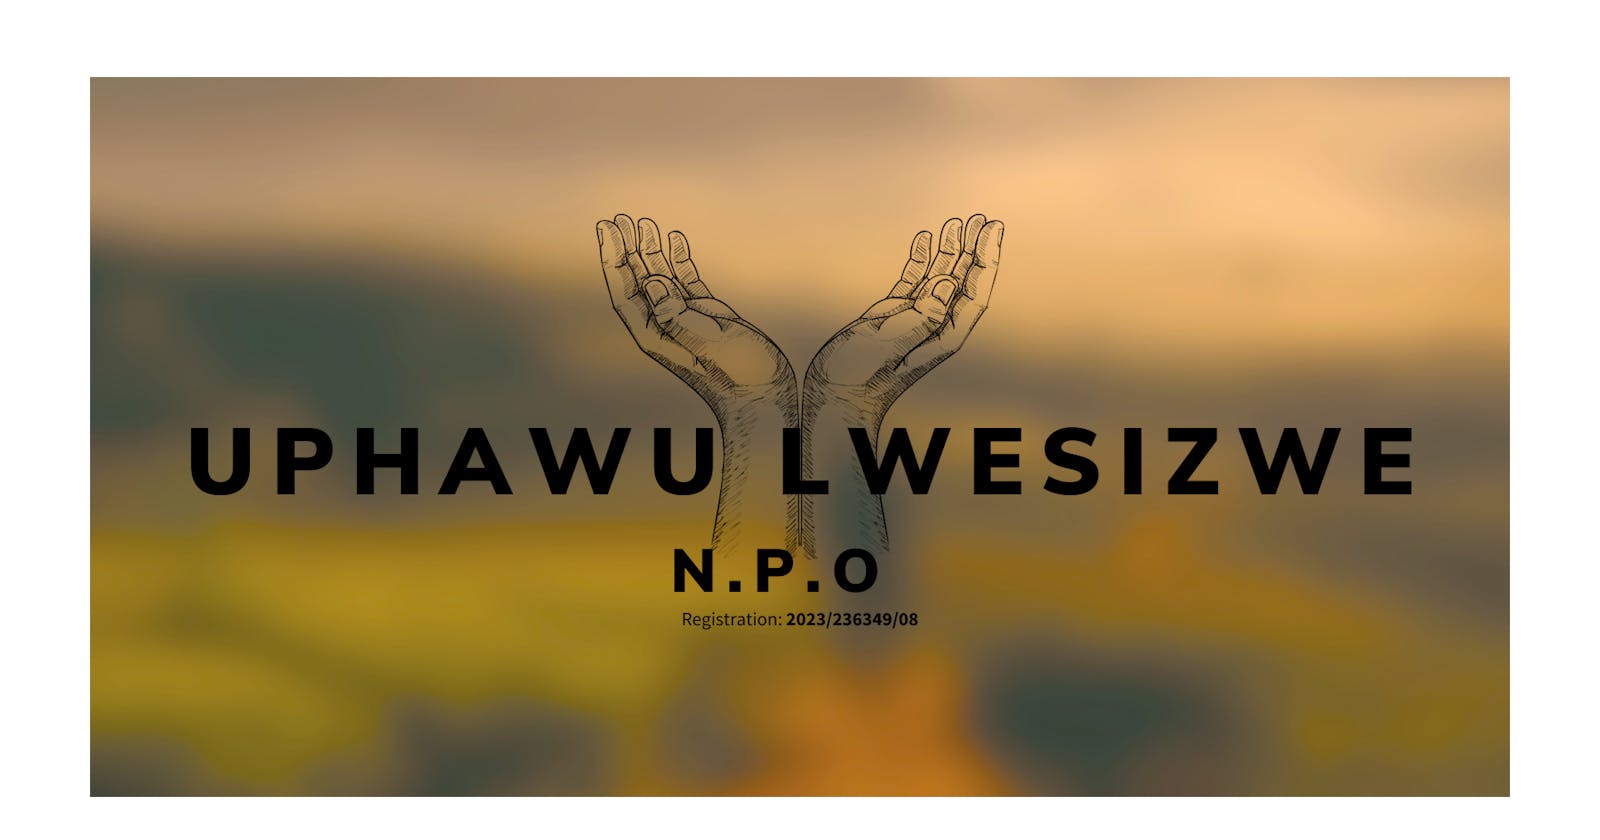 Empowering Communities Through Technical Innovation: The Uphawu Lwesizwe Project